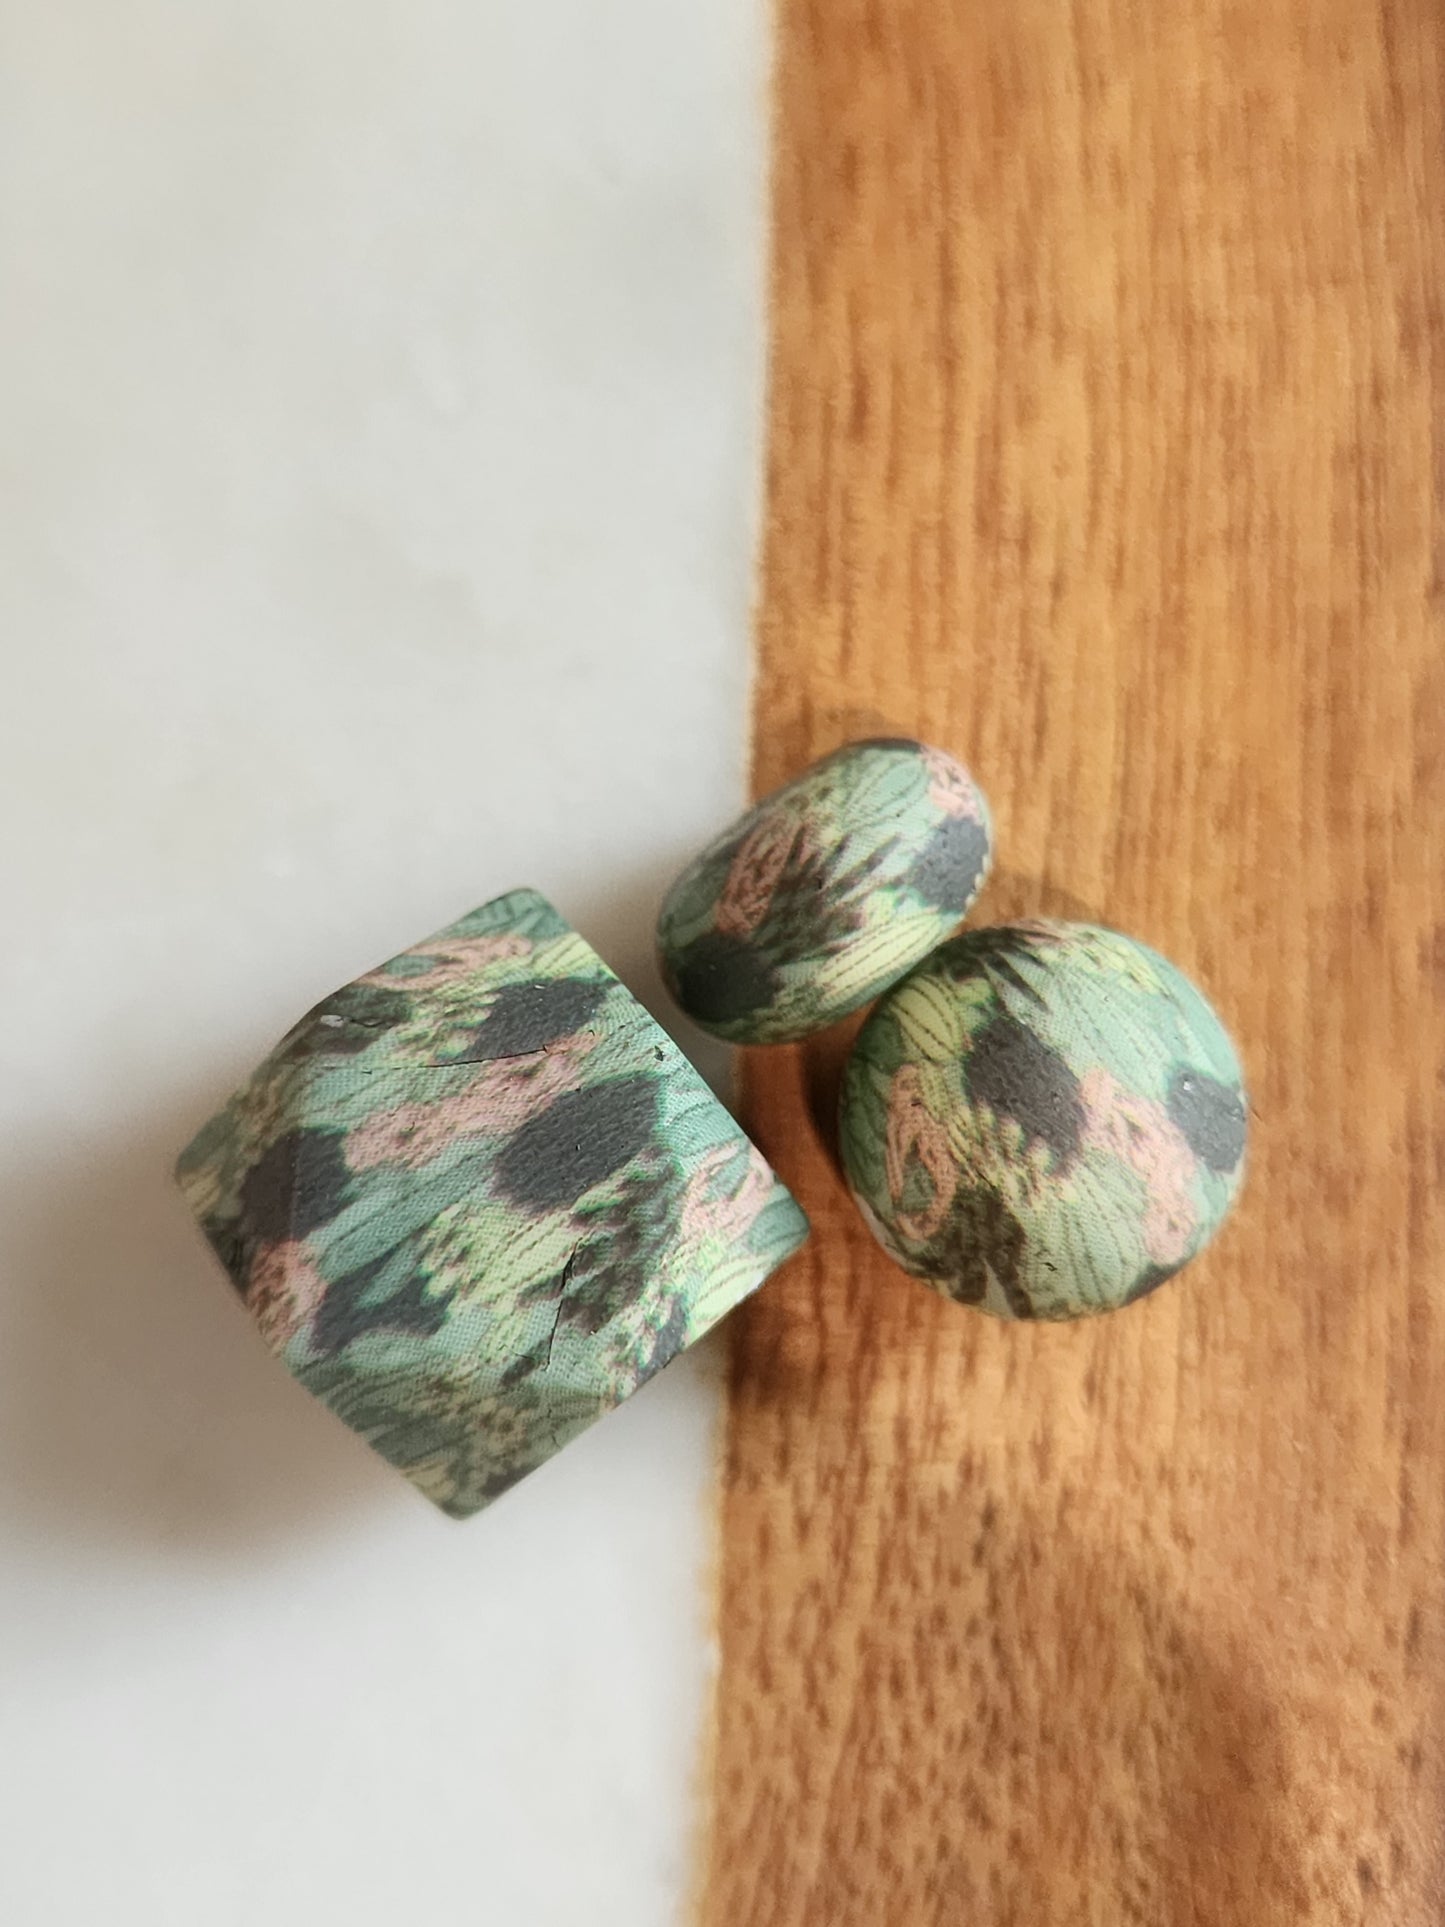 Cactus 15mm and hexagon custom silicone focal peint beads